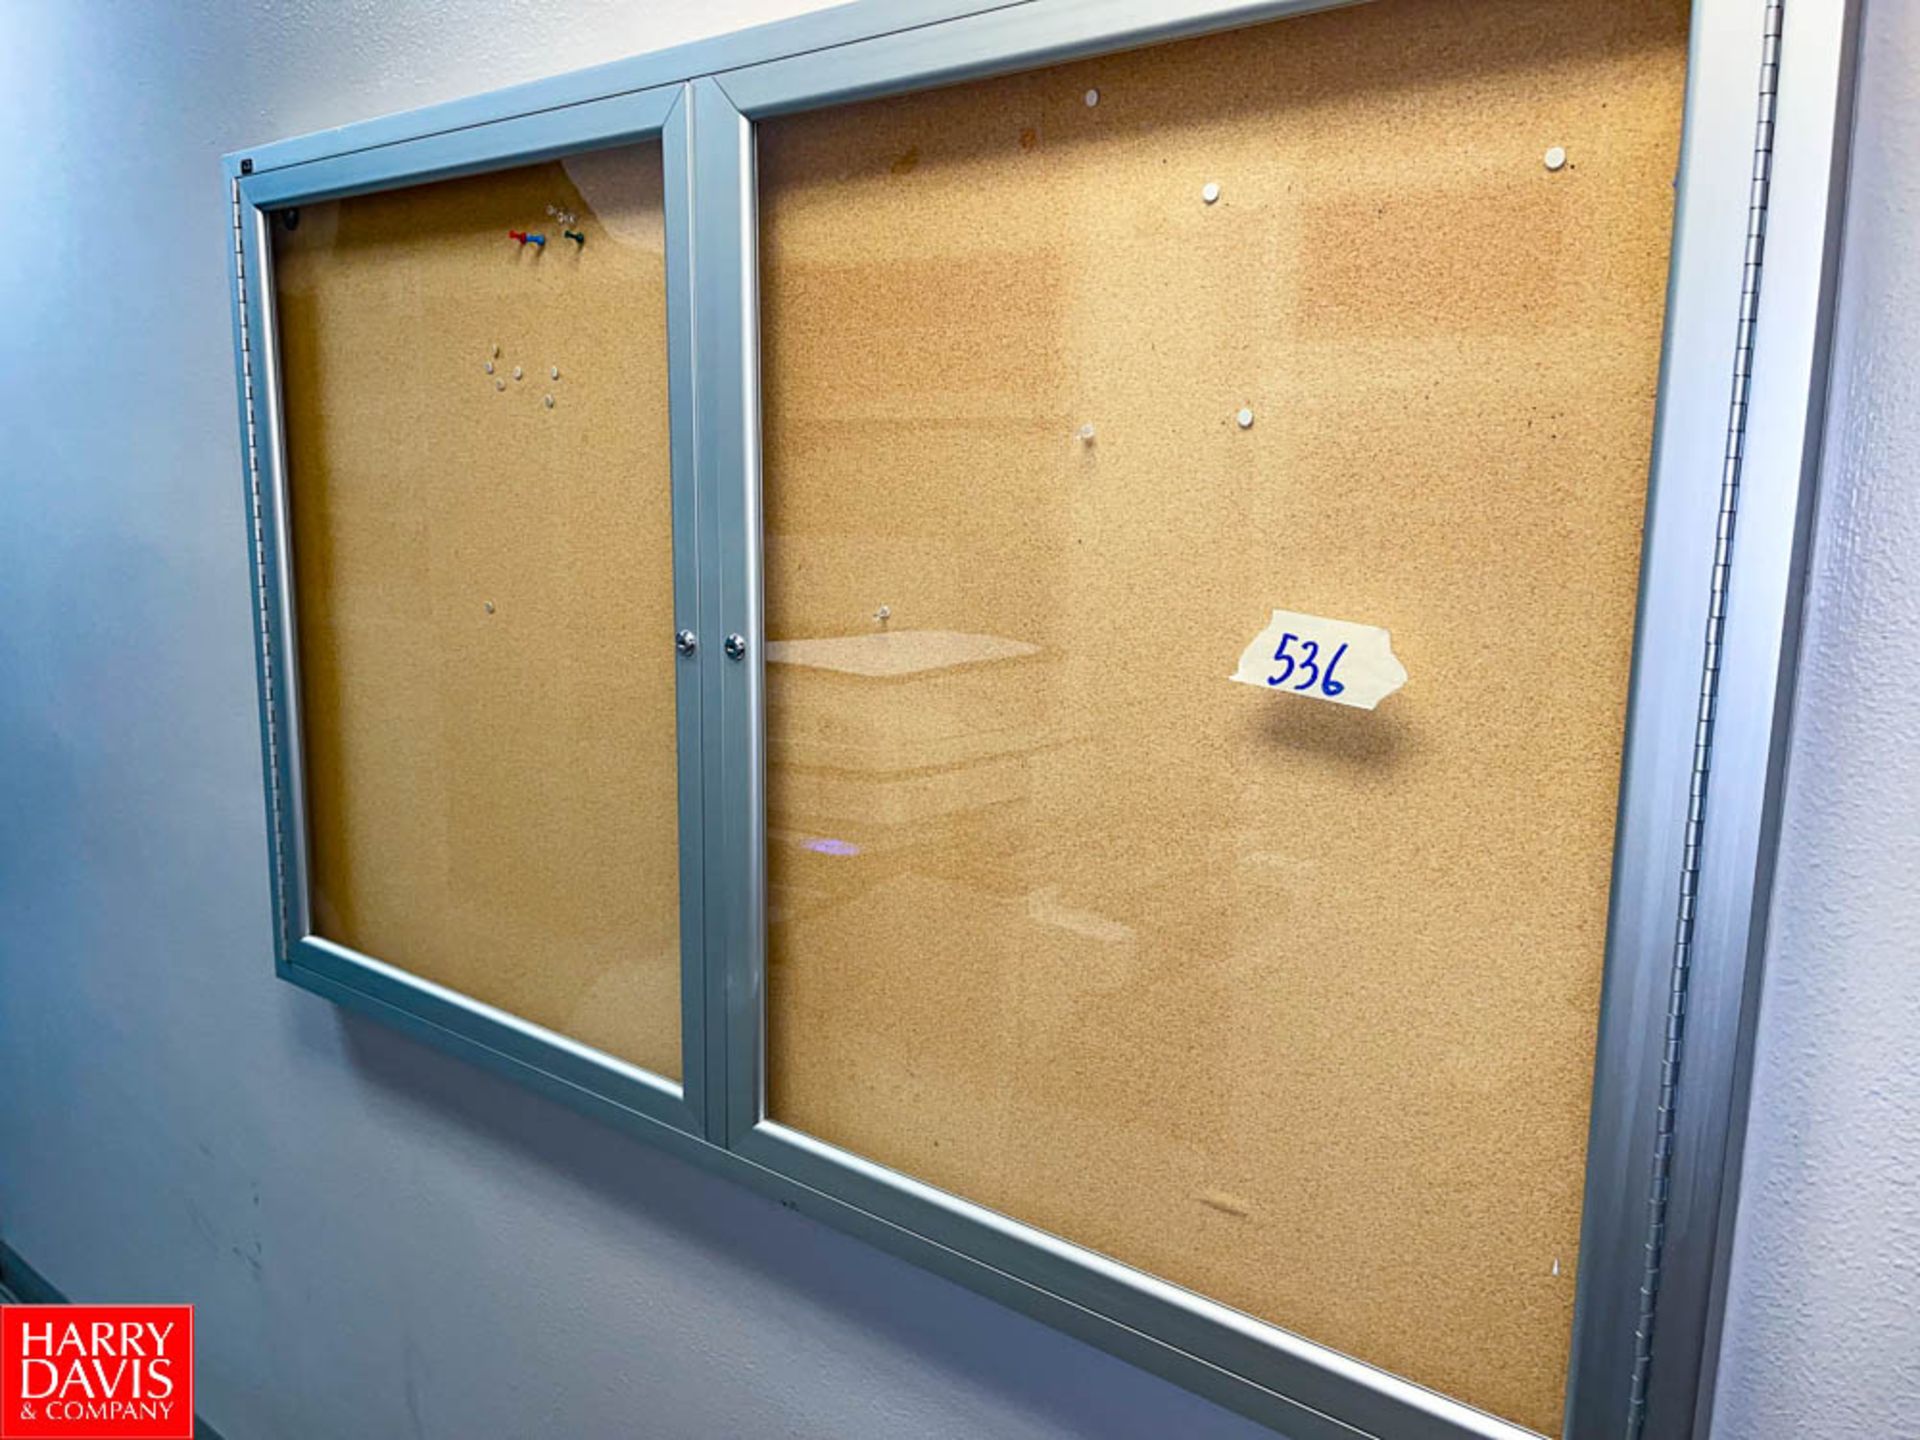 Glass Door Display Board Rigging Fee: $ 25